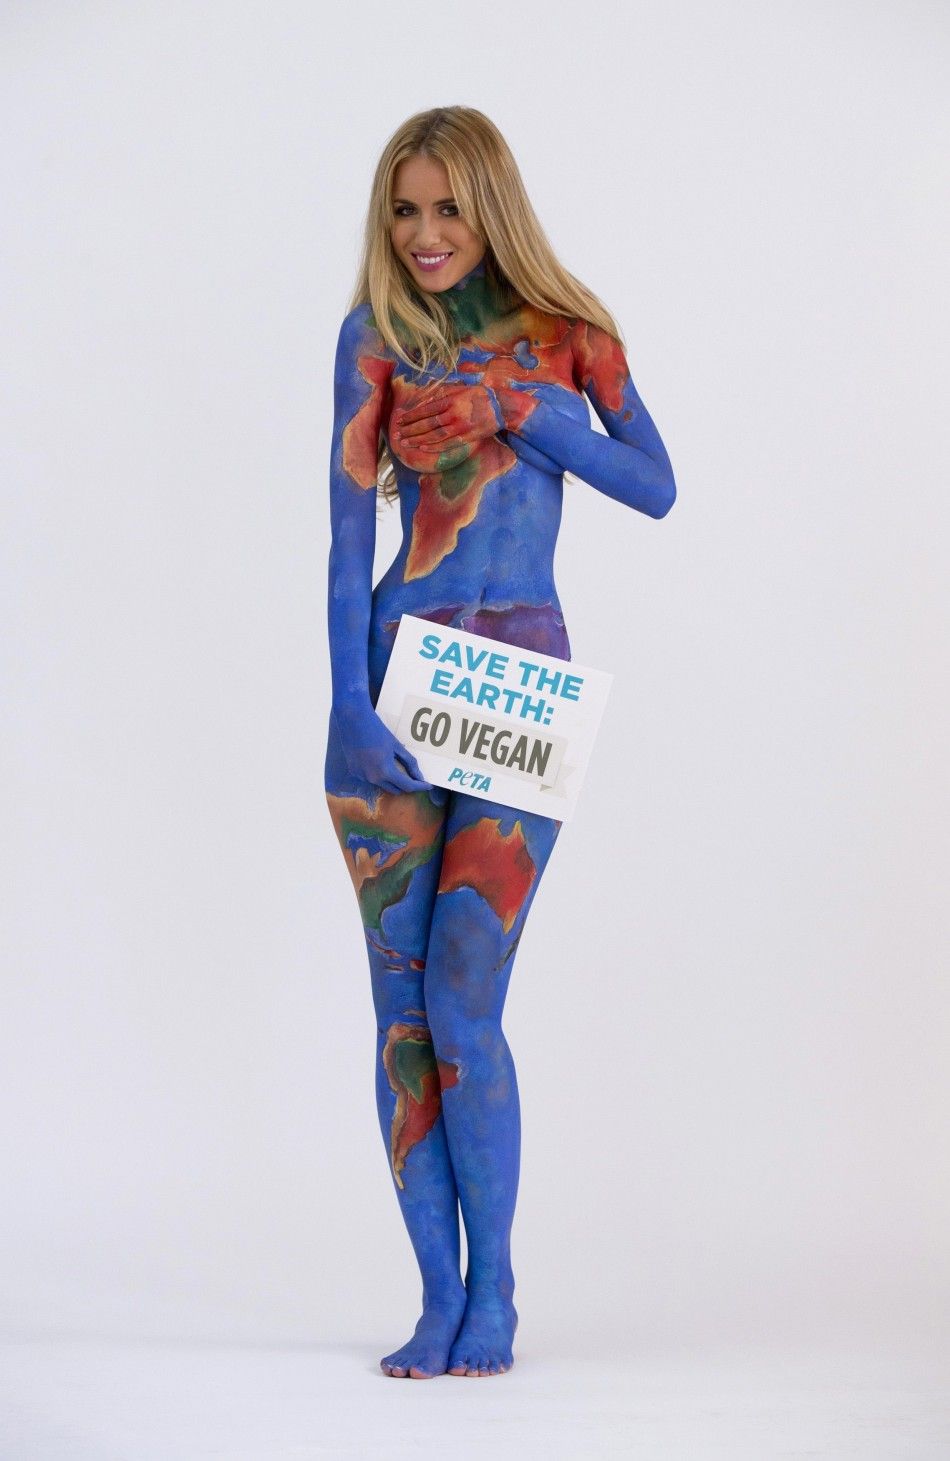 Model Renee Somerfield poses in body paint 